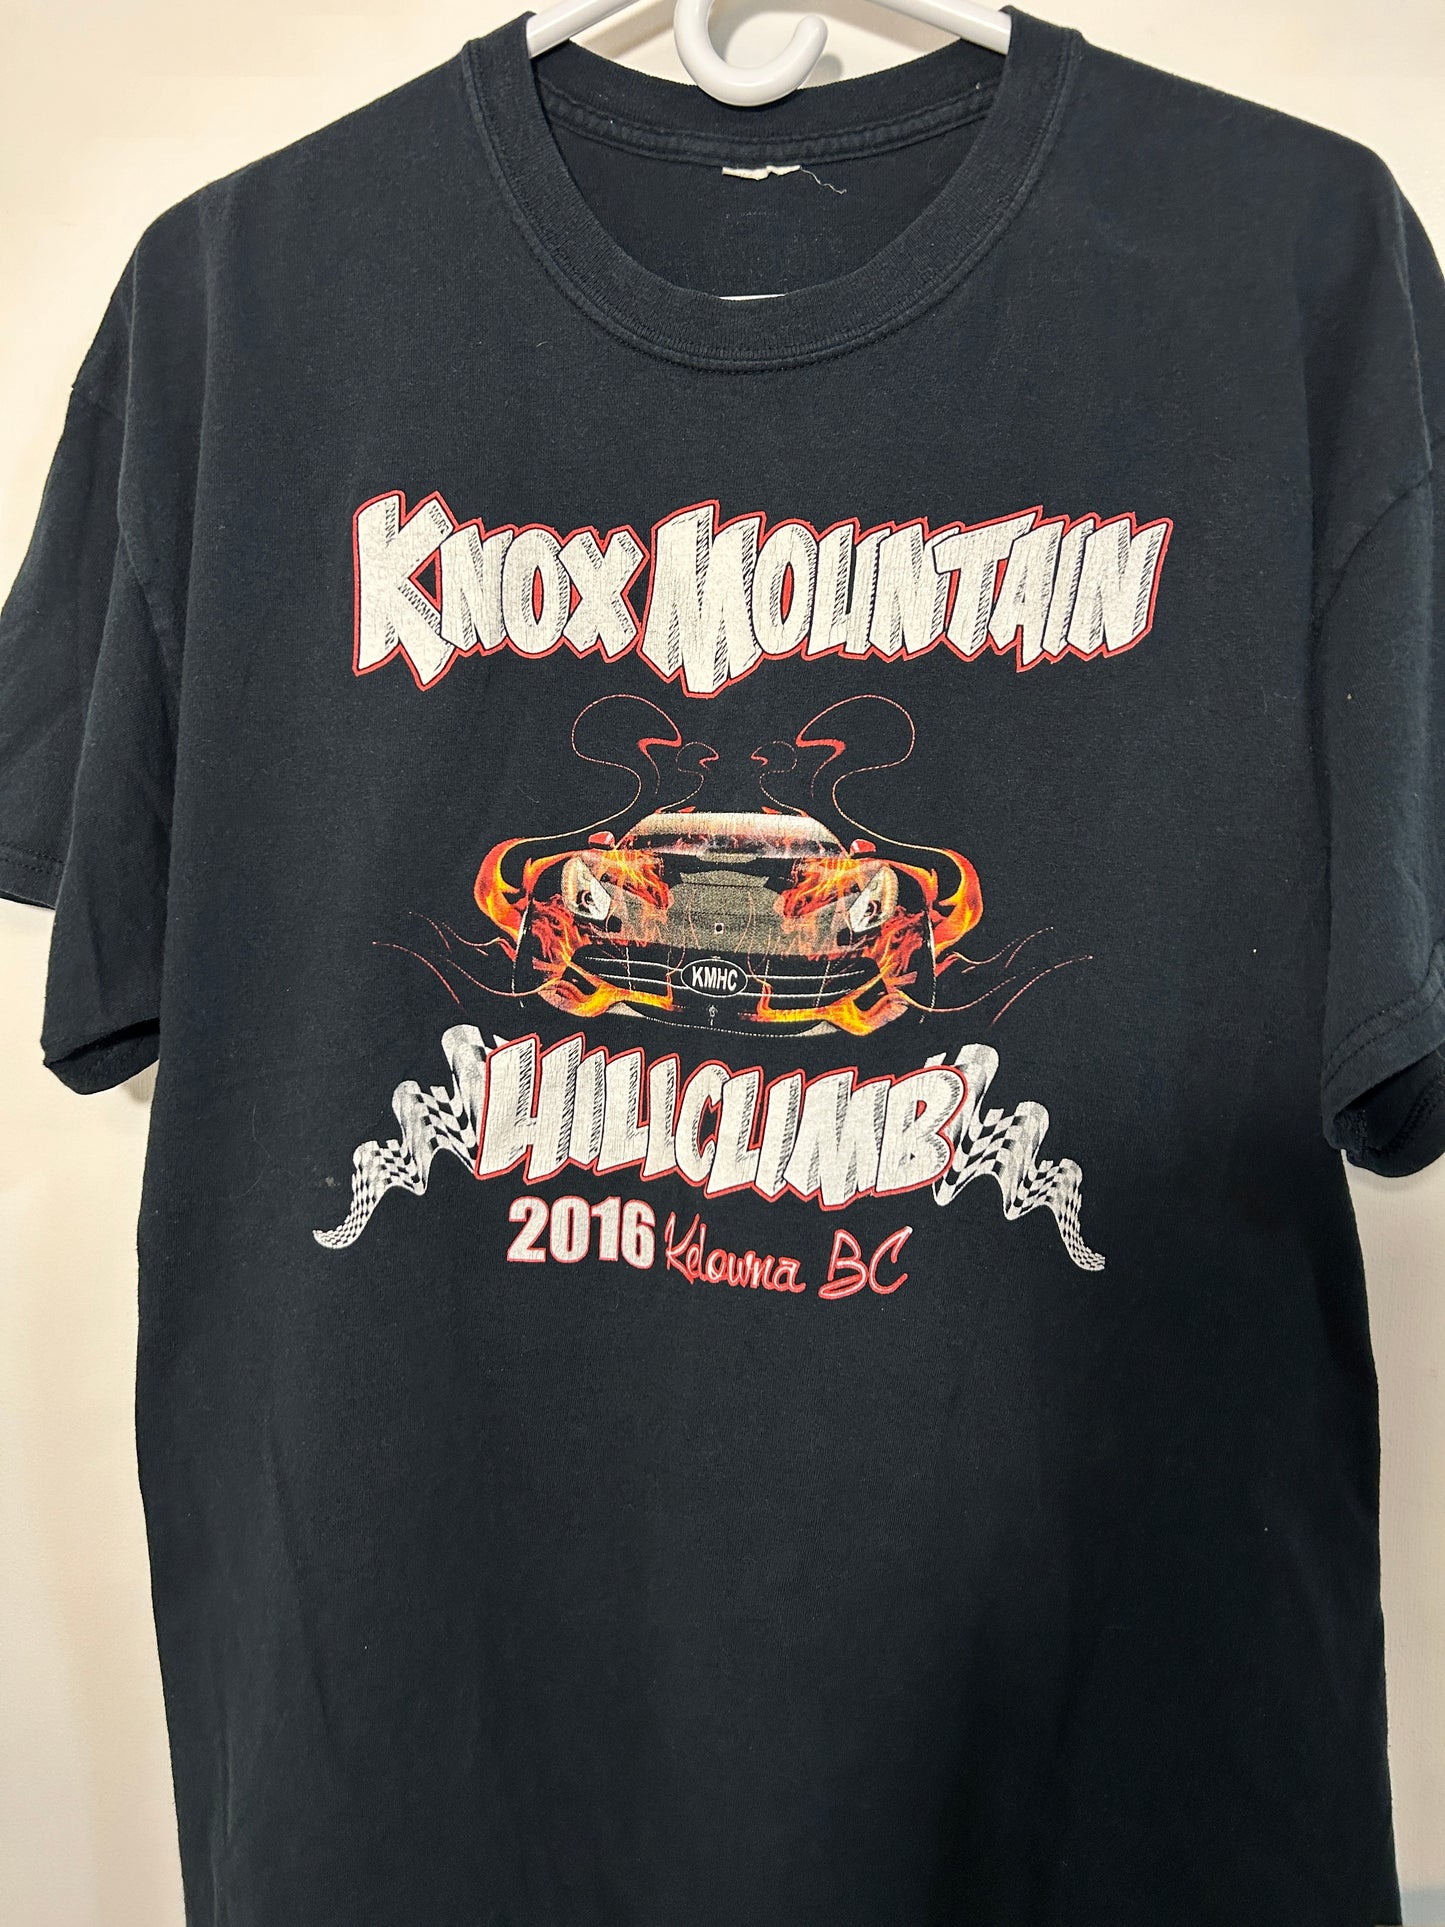 2016 Knox Mountain Hillclimb Tee (L)